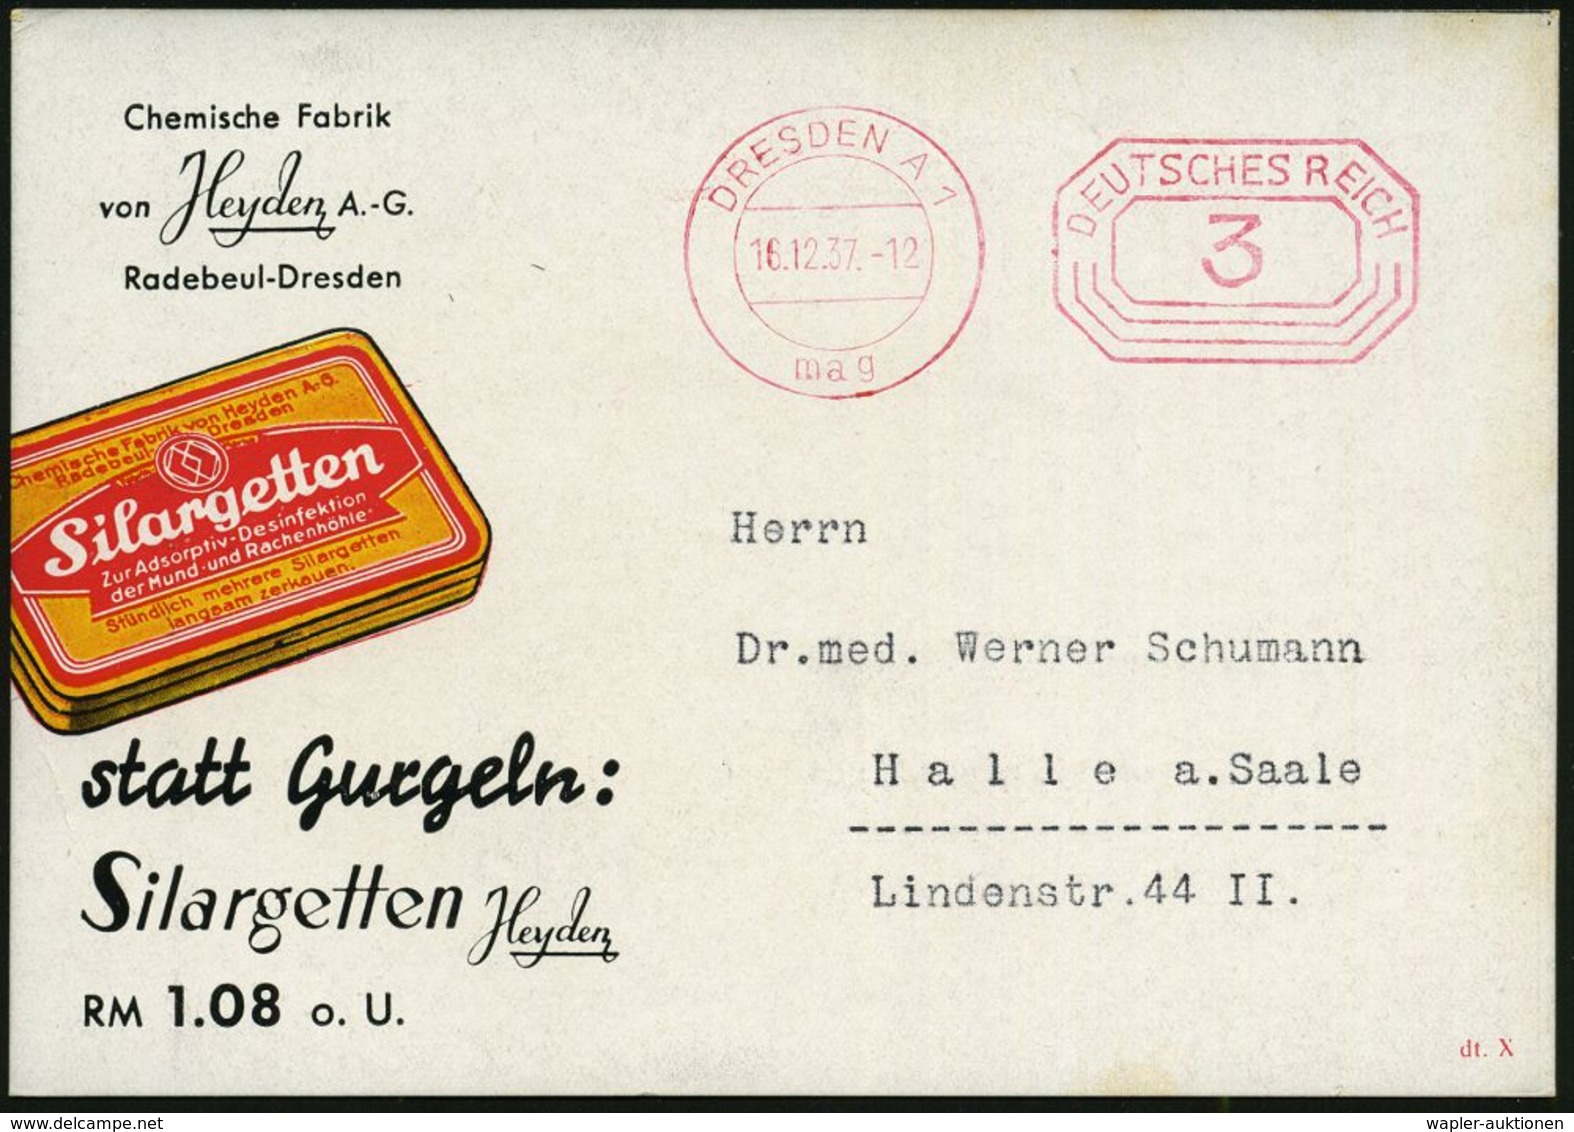 PÄDIATRIE / GYNÄKOLOGIE : DRESDEN A 1/ Mag 1937 (16.12.) PFS 3 Pf. Auf Color-Reklame-Kt.: Silargetten Heyden AG. (Pharma - Maladies